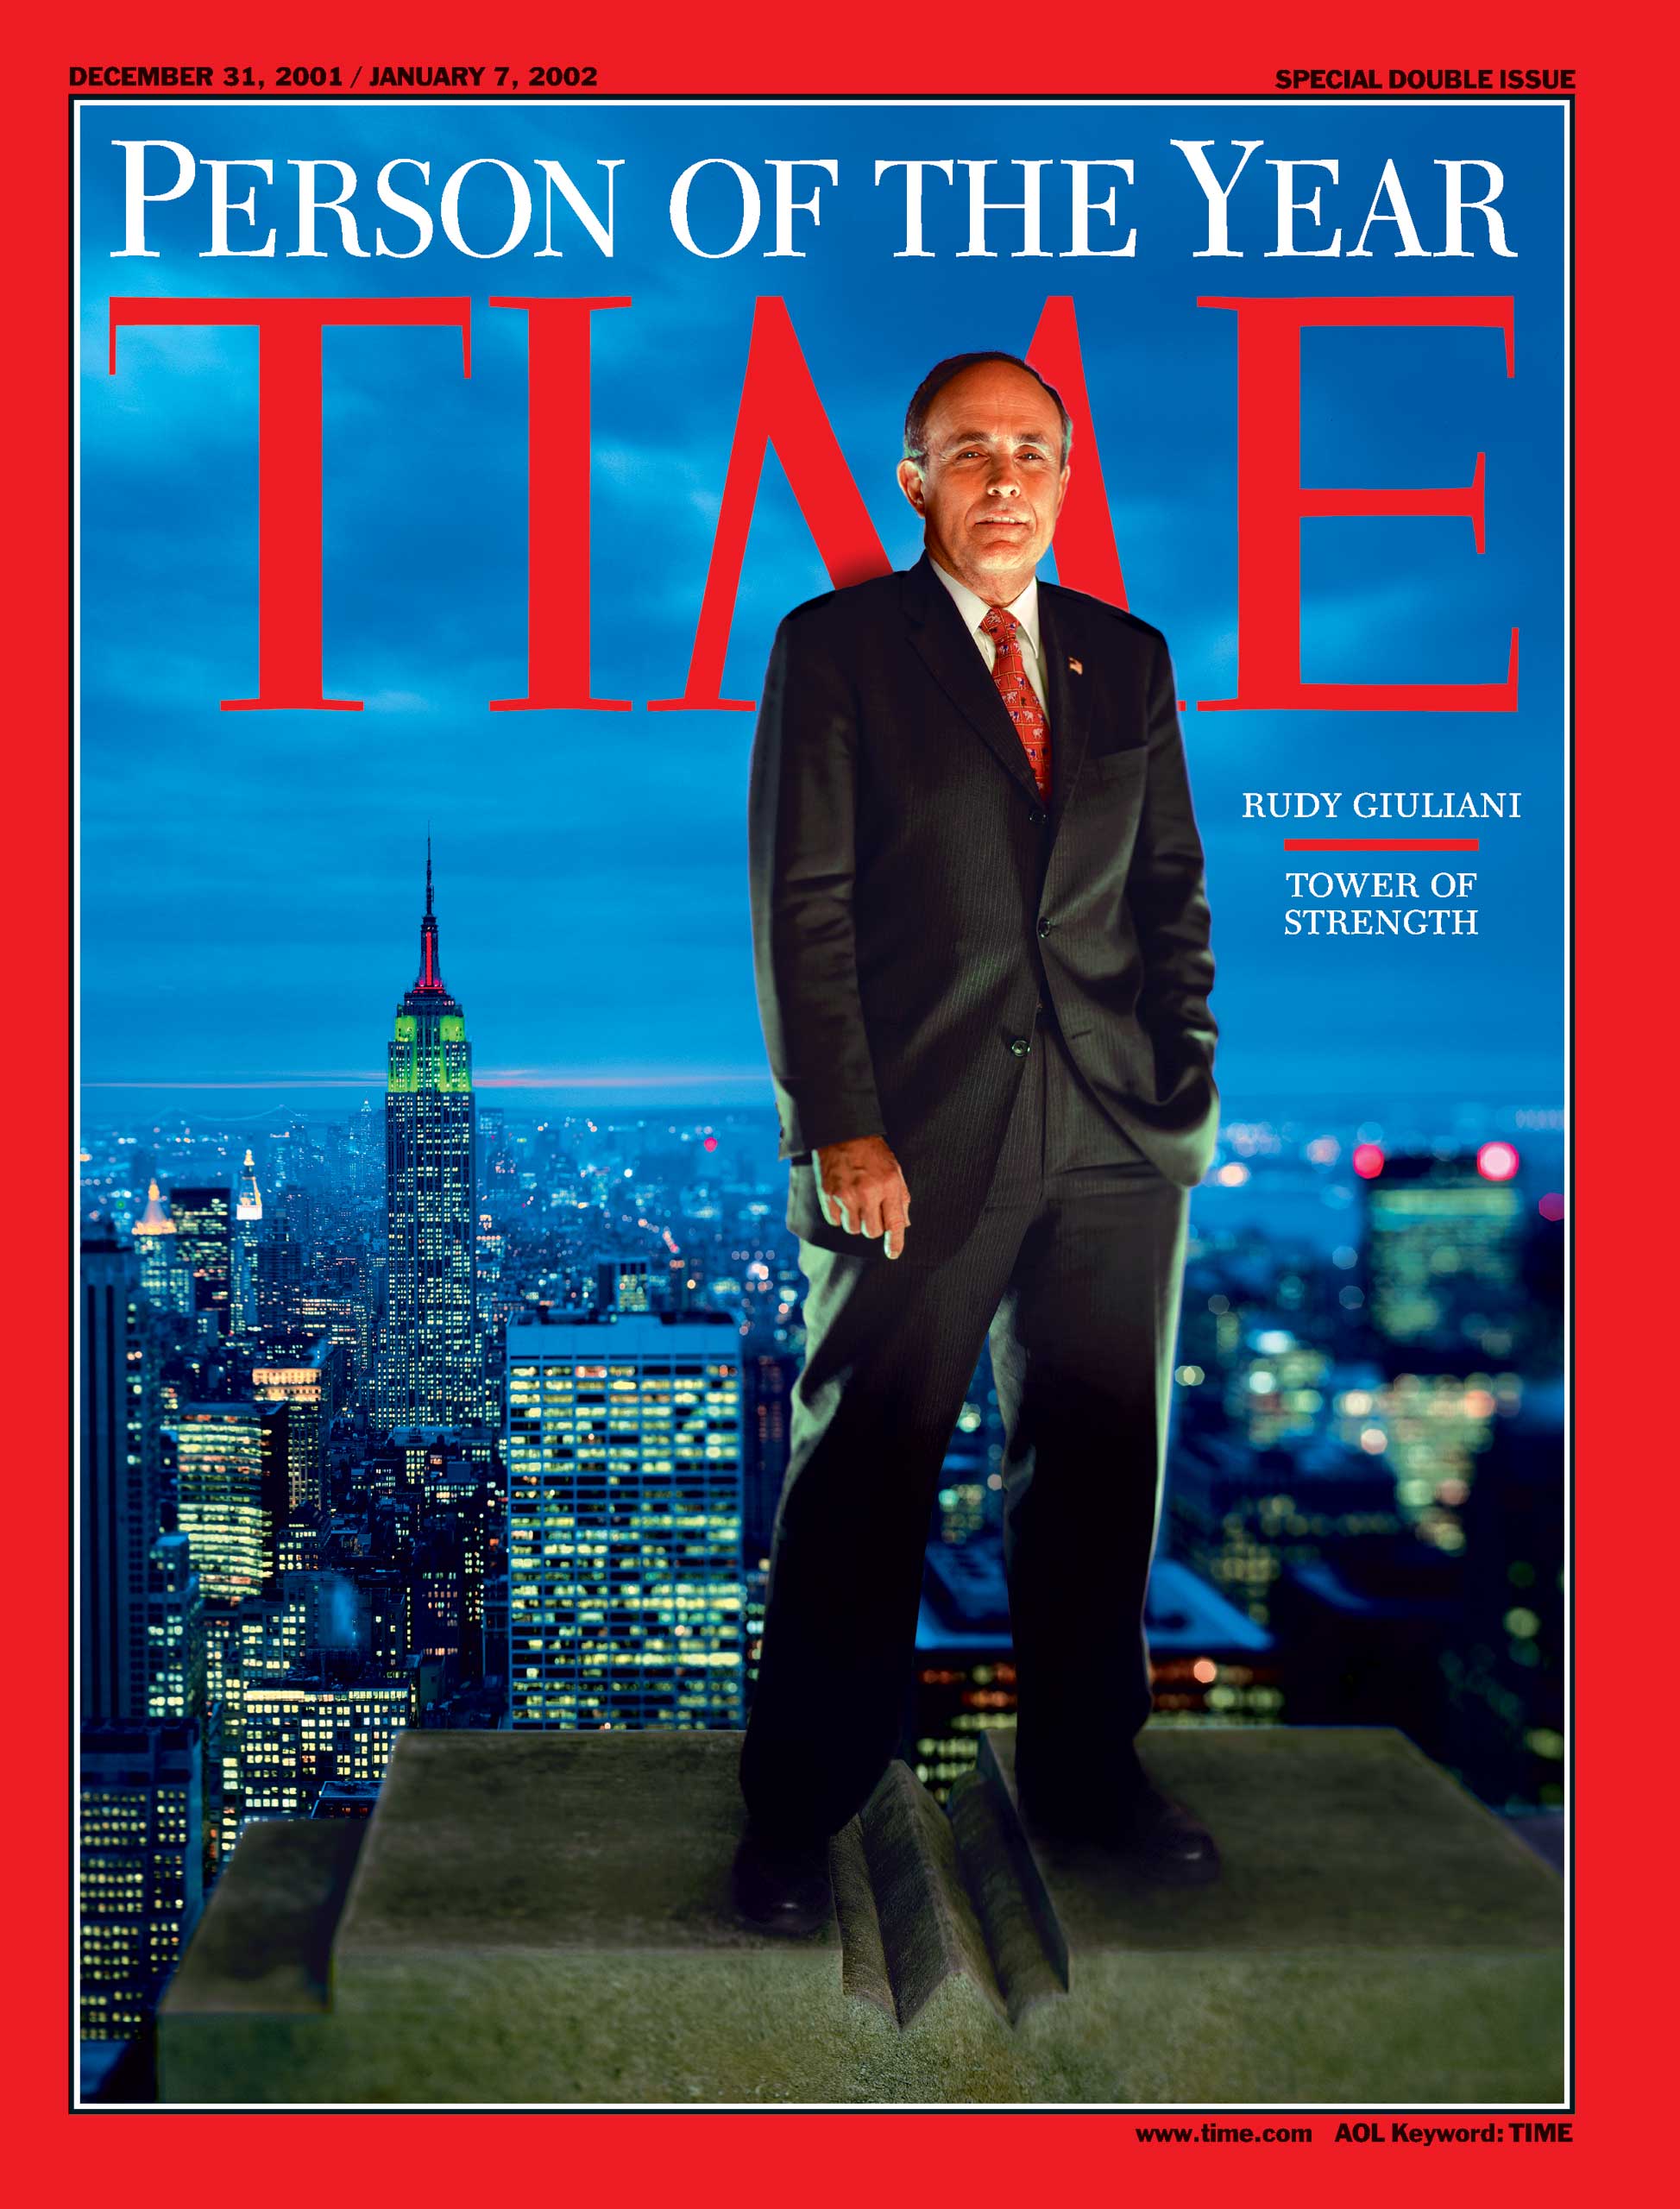 2001: Rudy Giuliani